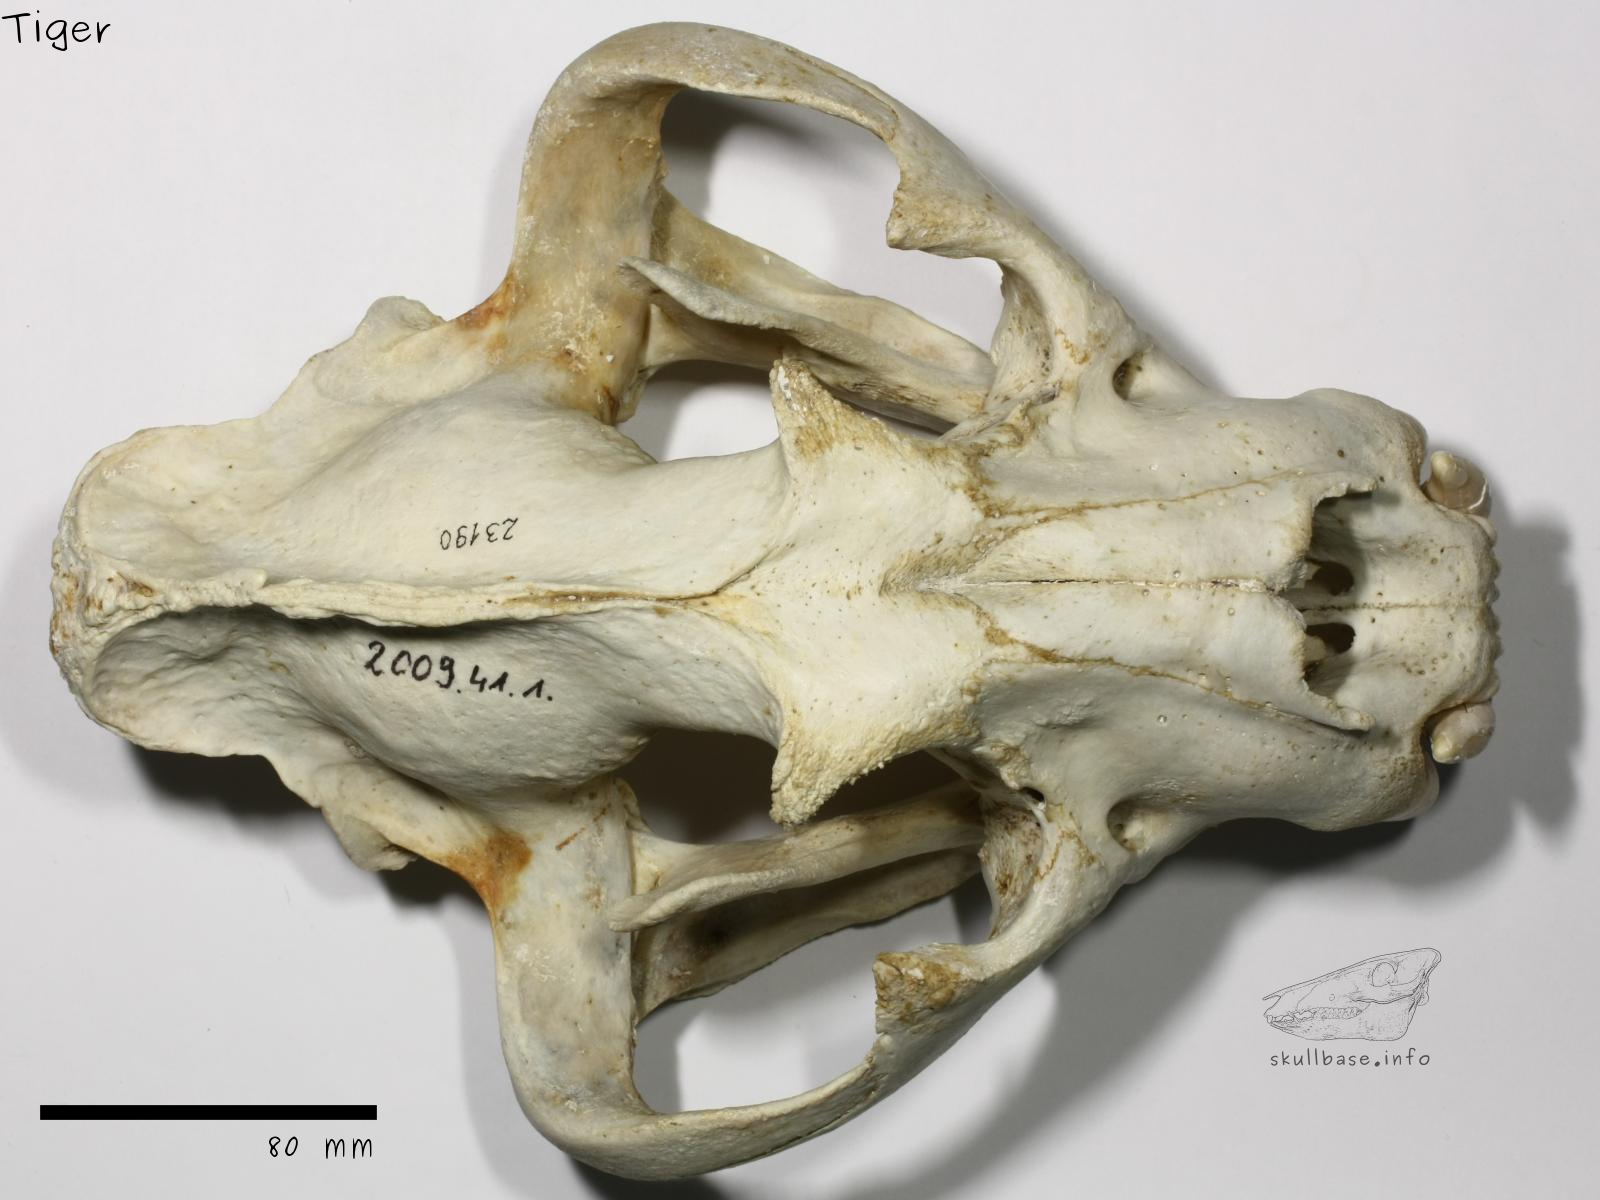 Tiger (Panthera tigris) skull dorsal view